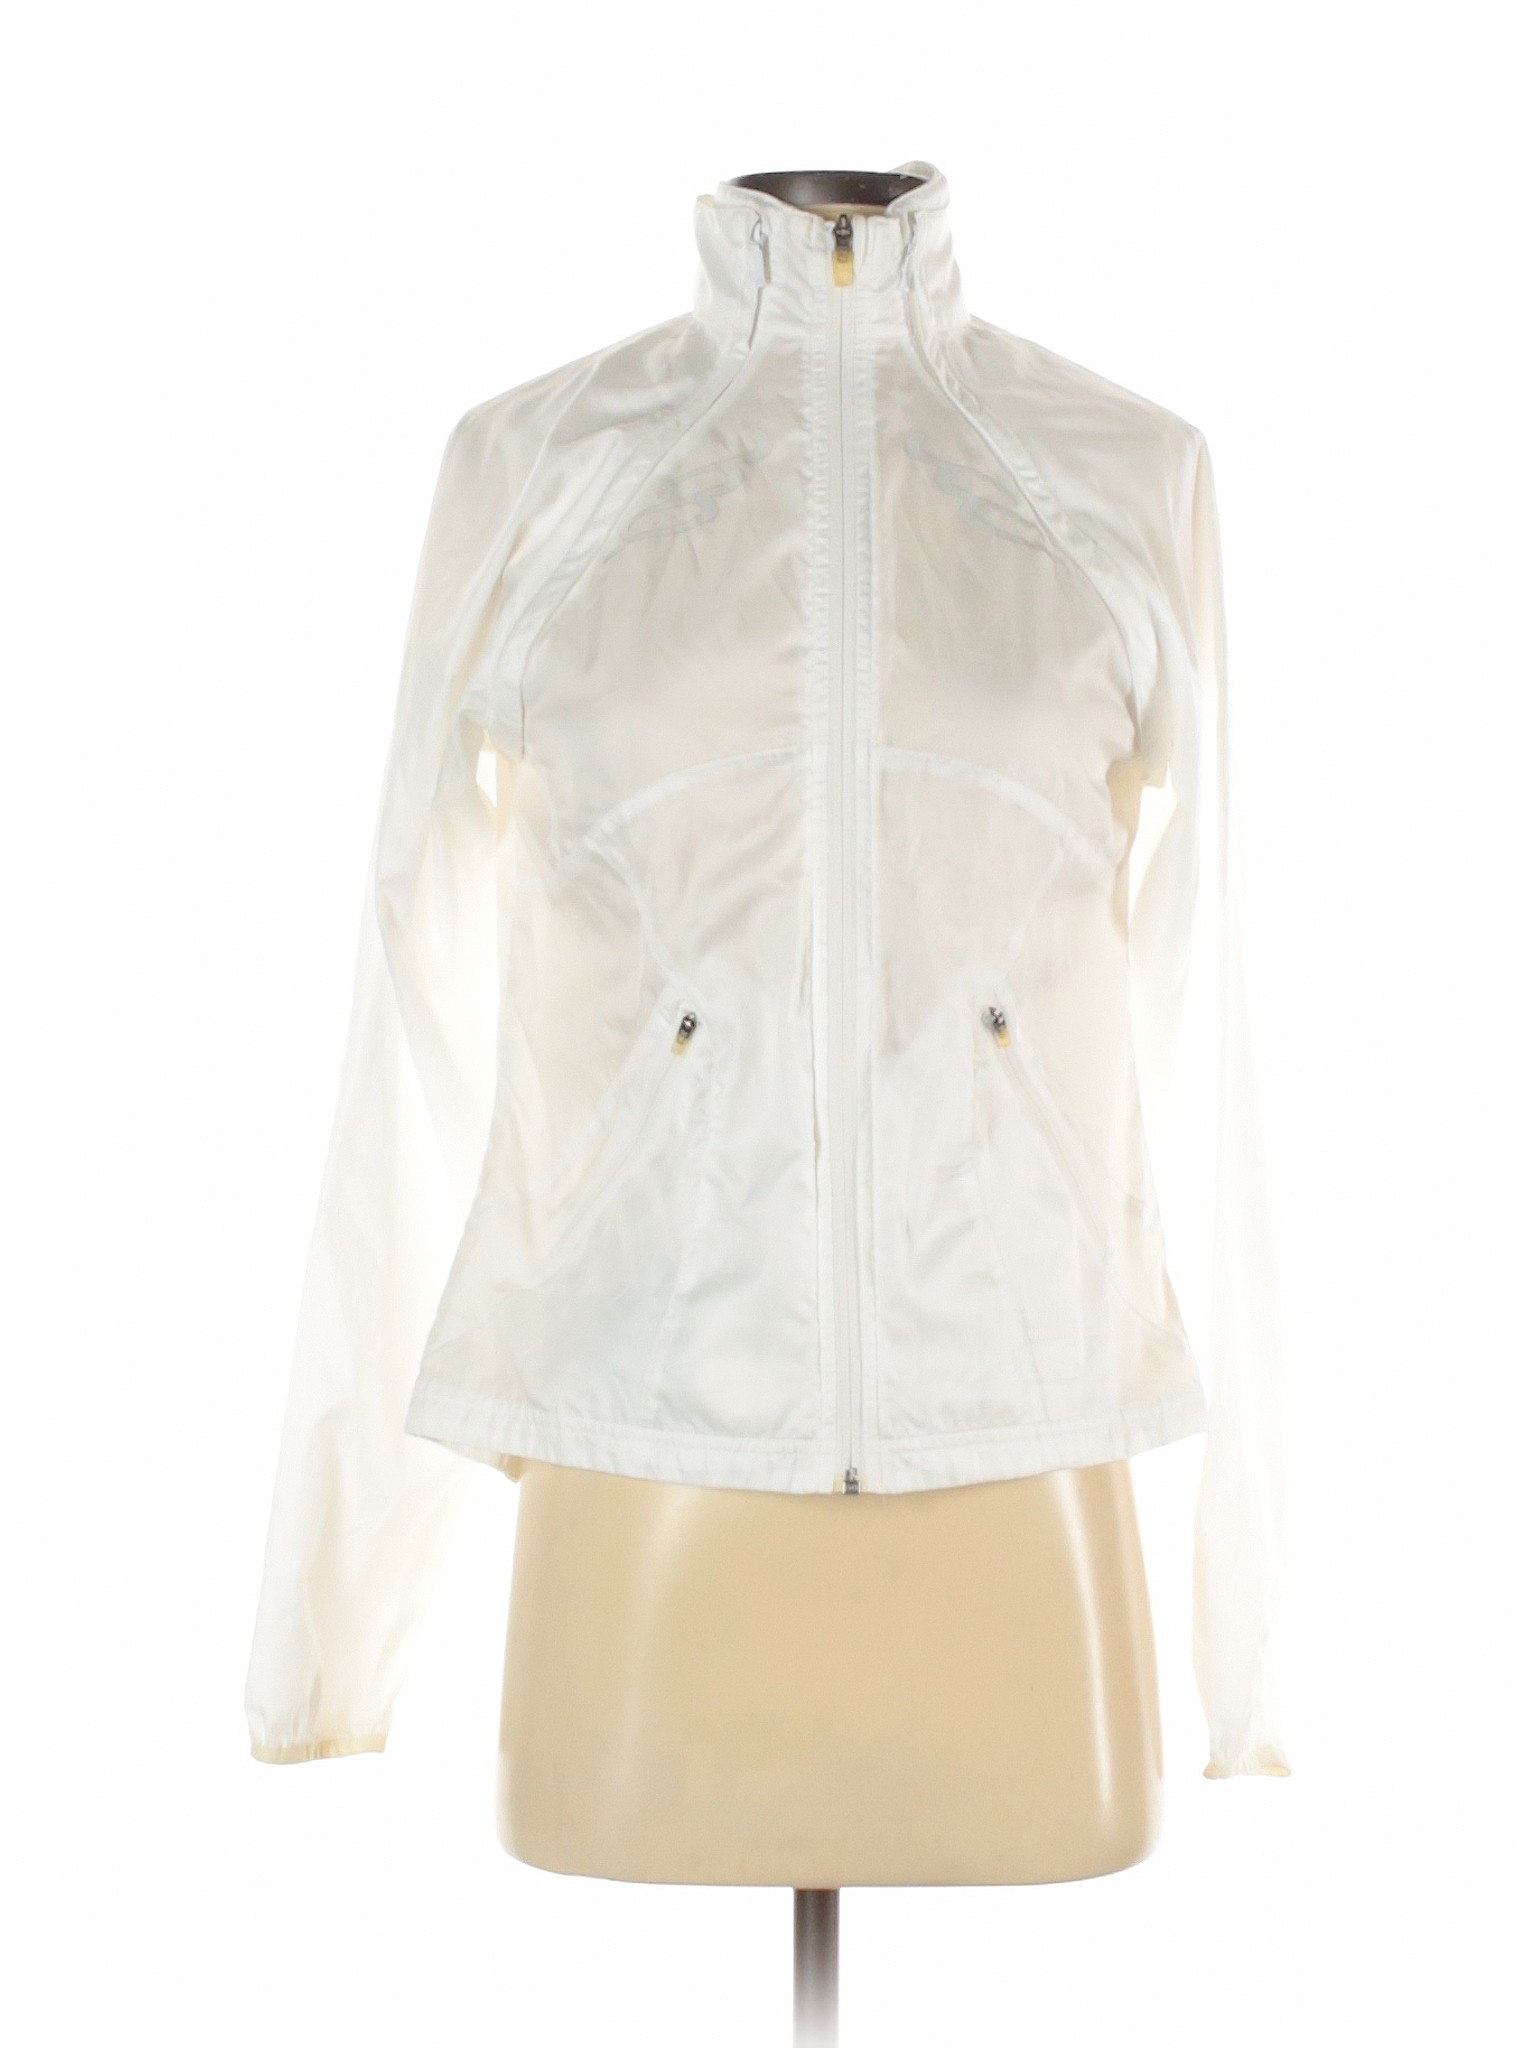 white lightweight pullover windbreaker jacket